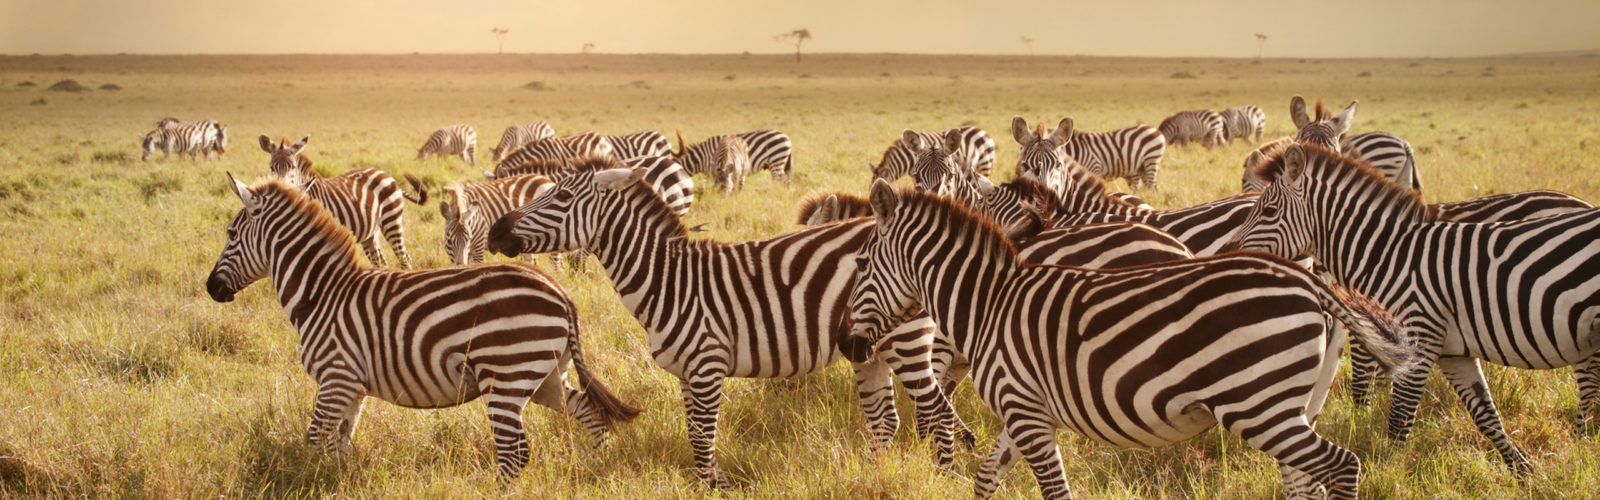 Zebras in the Maasai Mara, Kenya